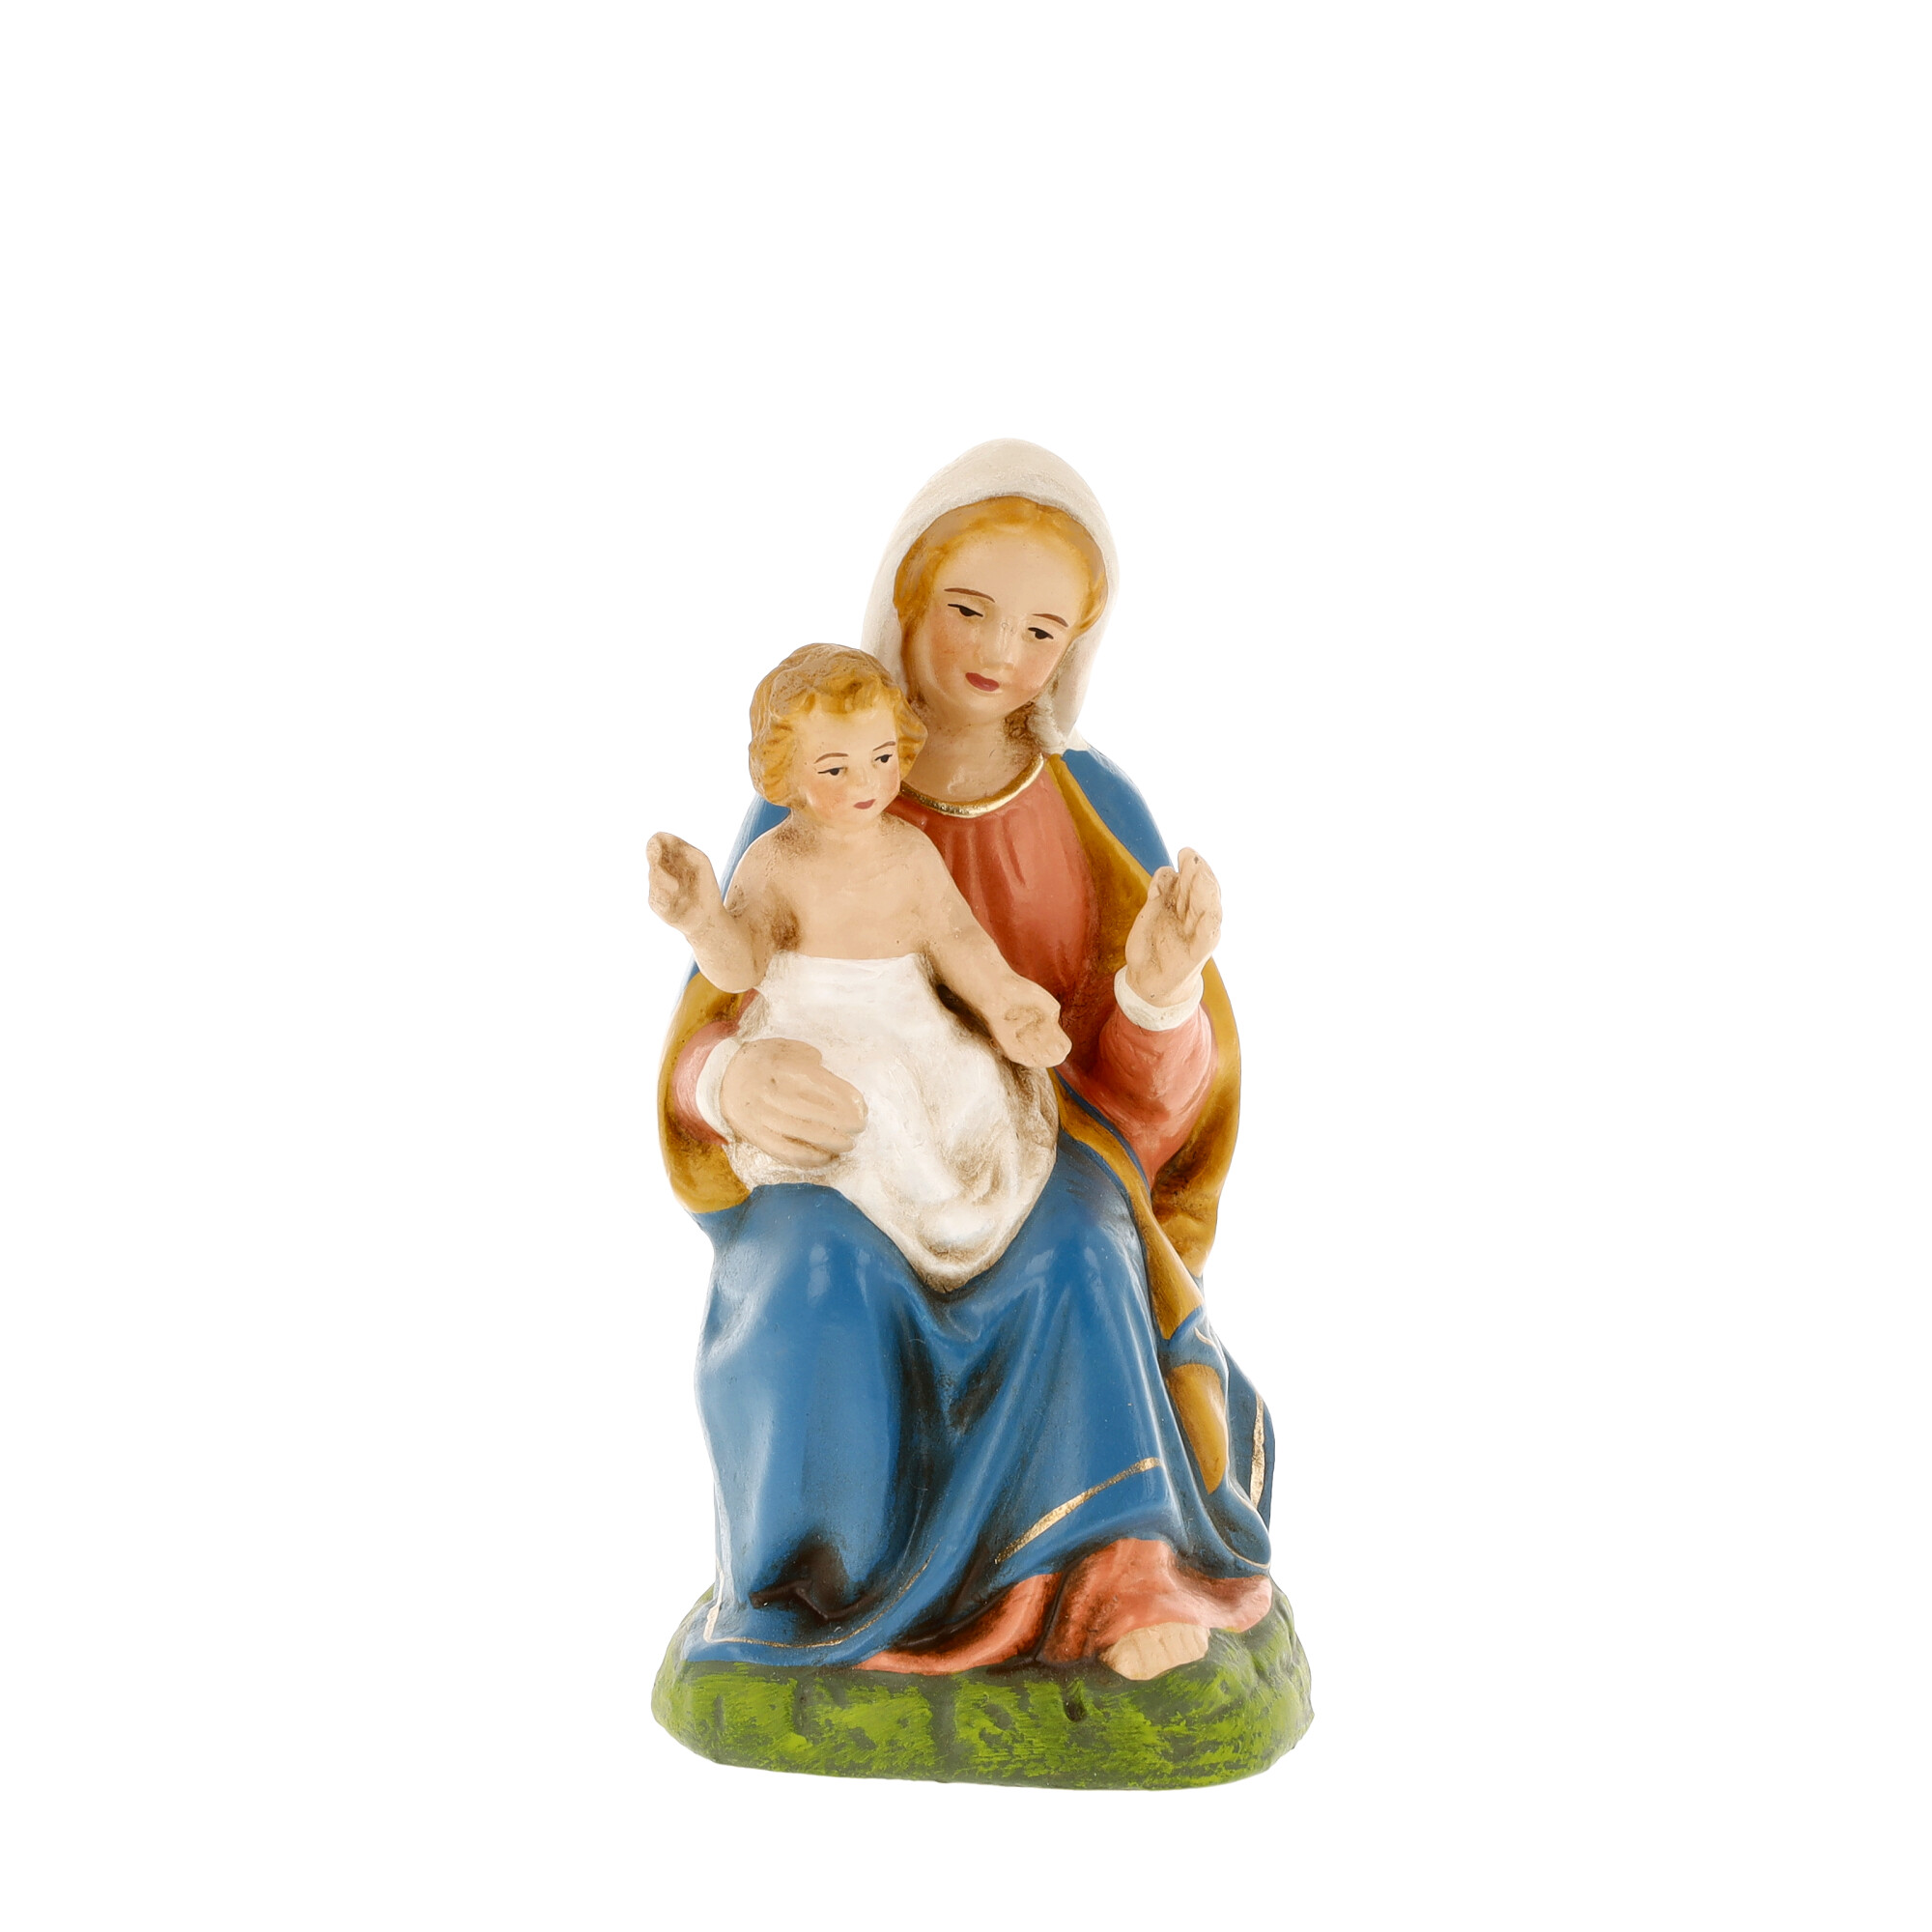 Sitting Mary with infant Jesus - MAROLIN Nativity figure